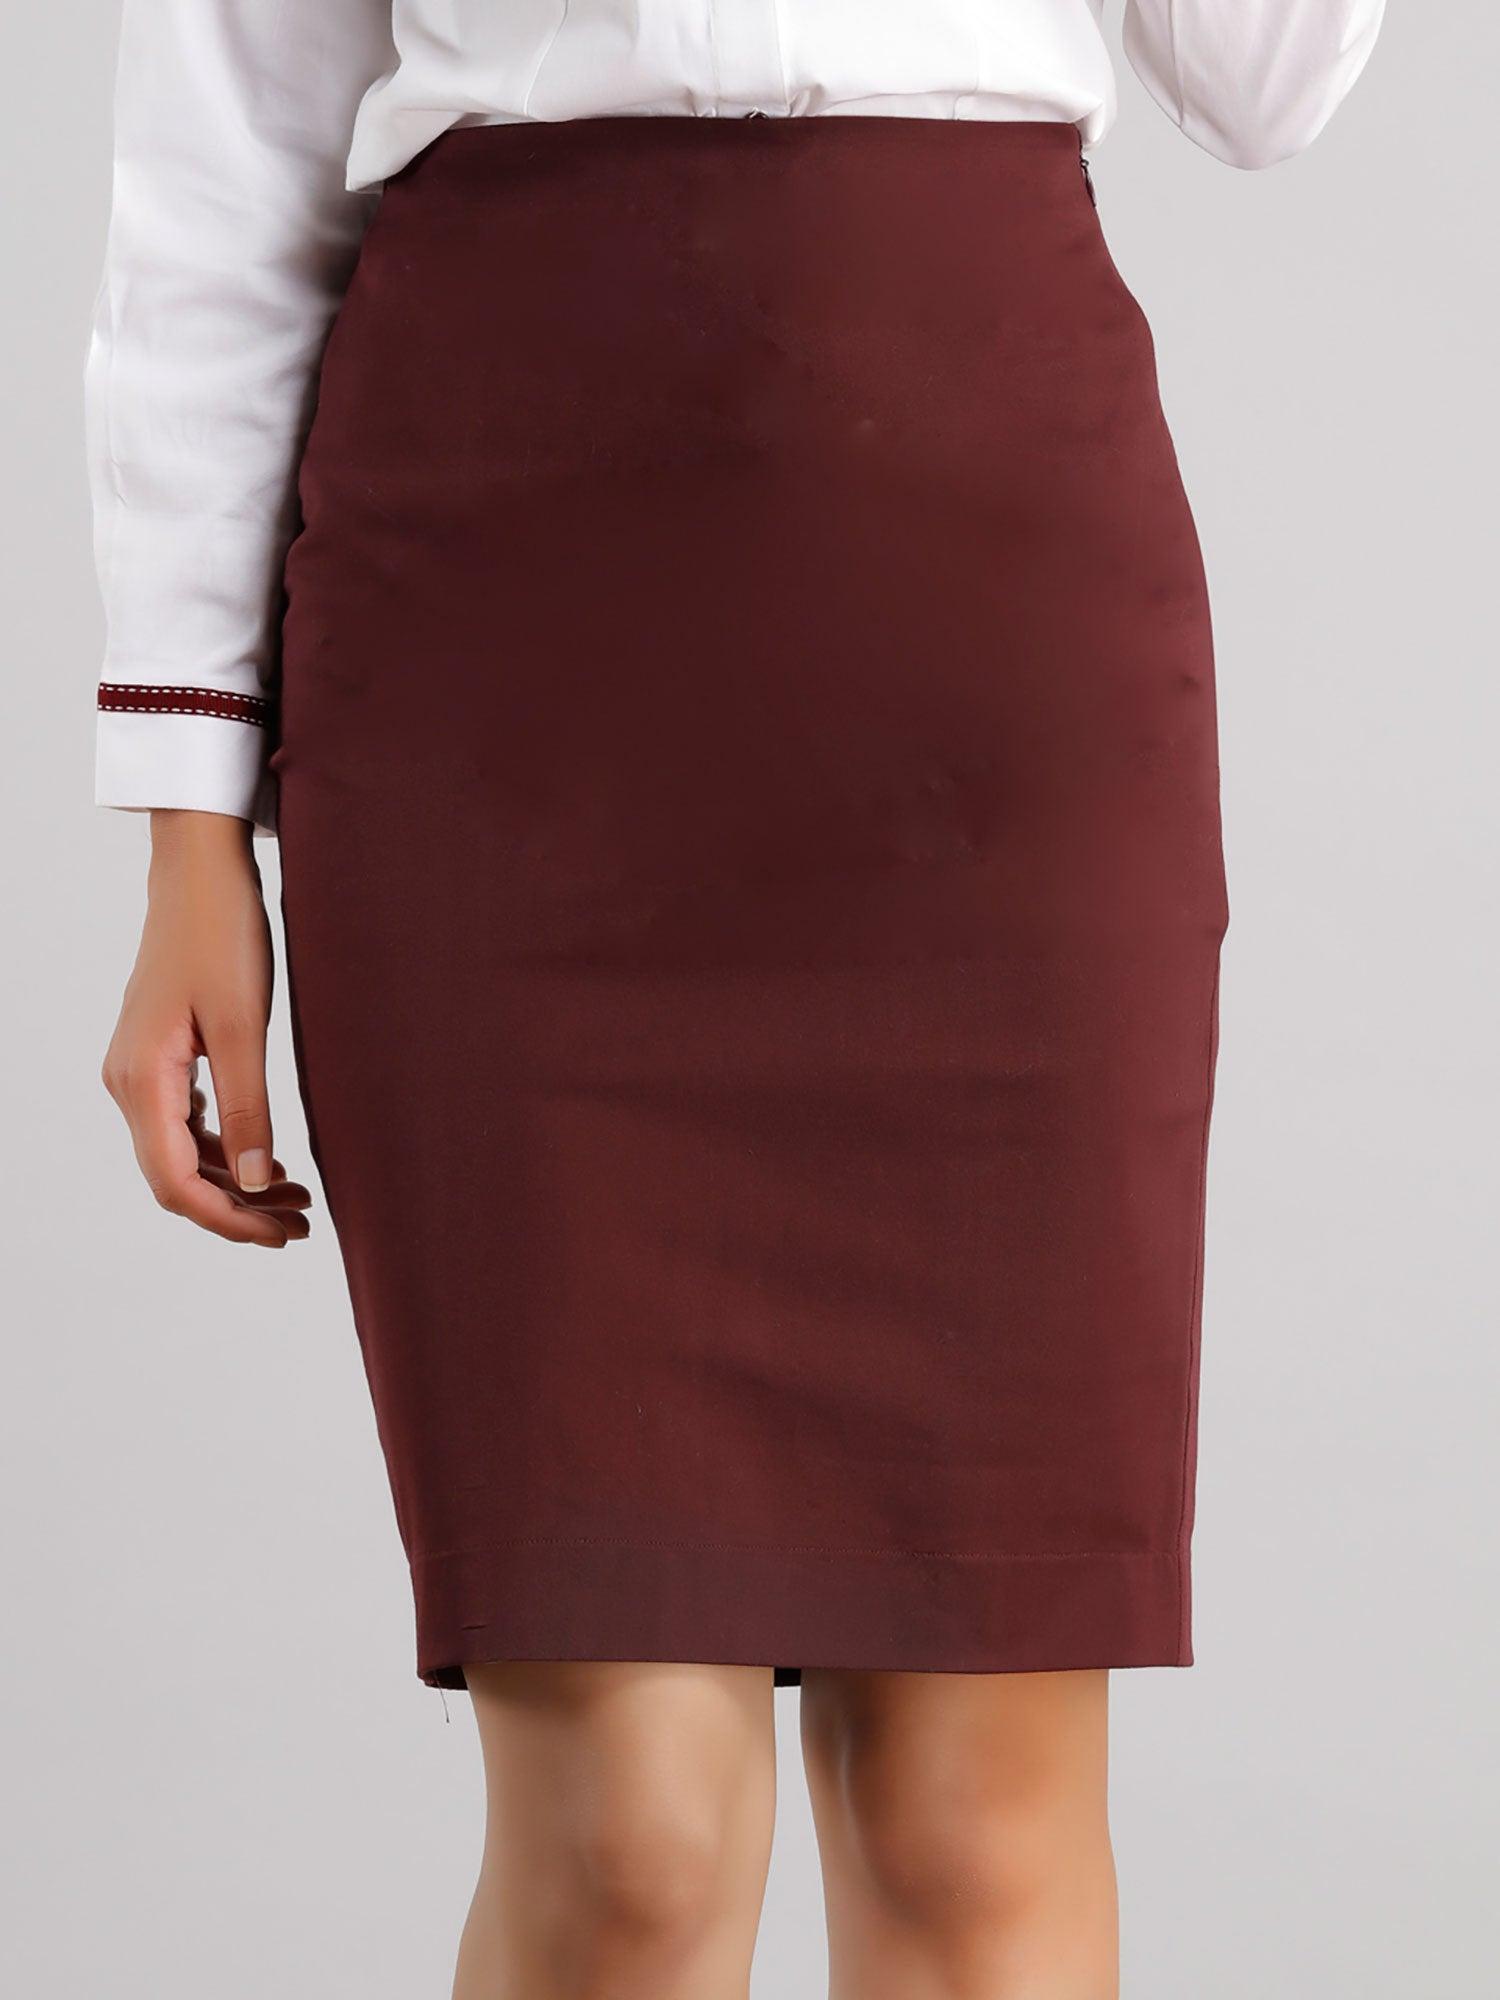 Classic Pencil Skirt - Maroon| Formal Skirts